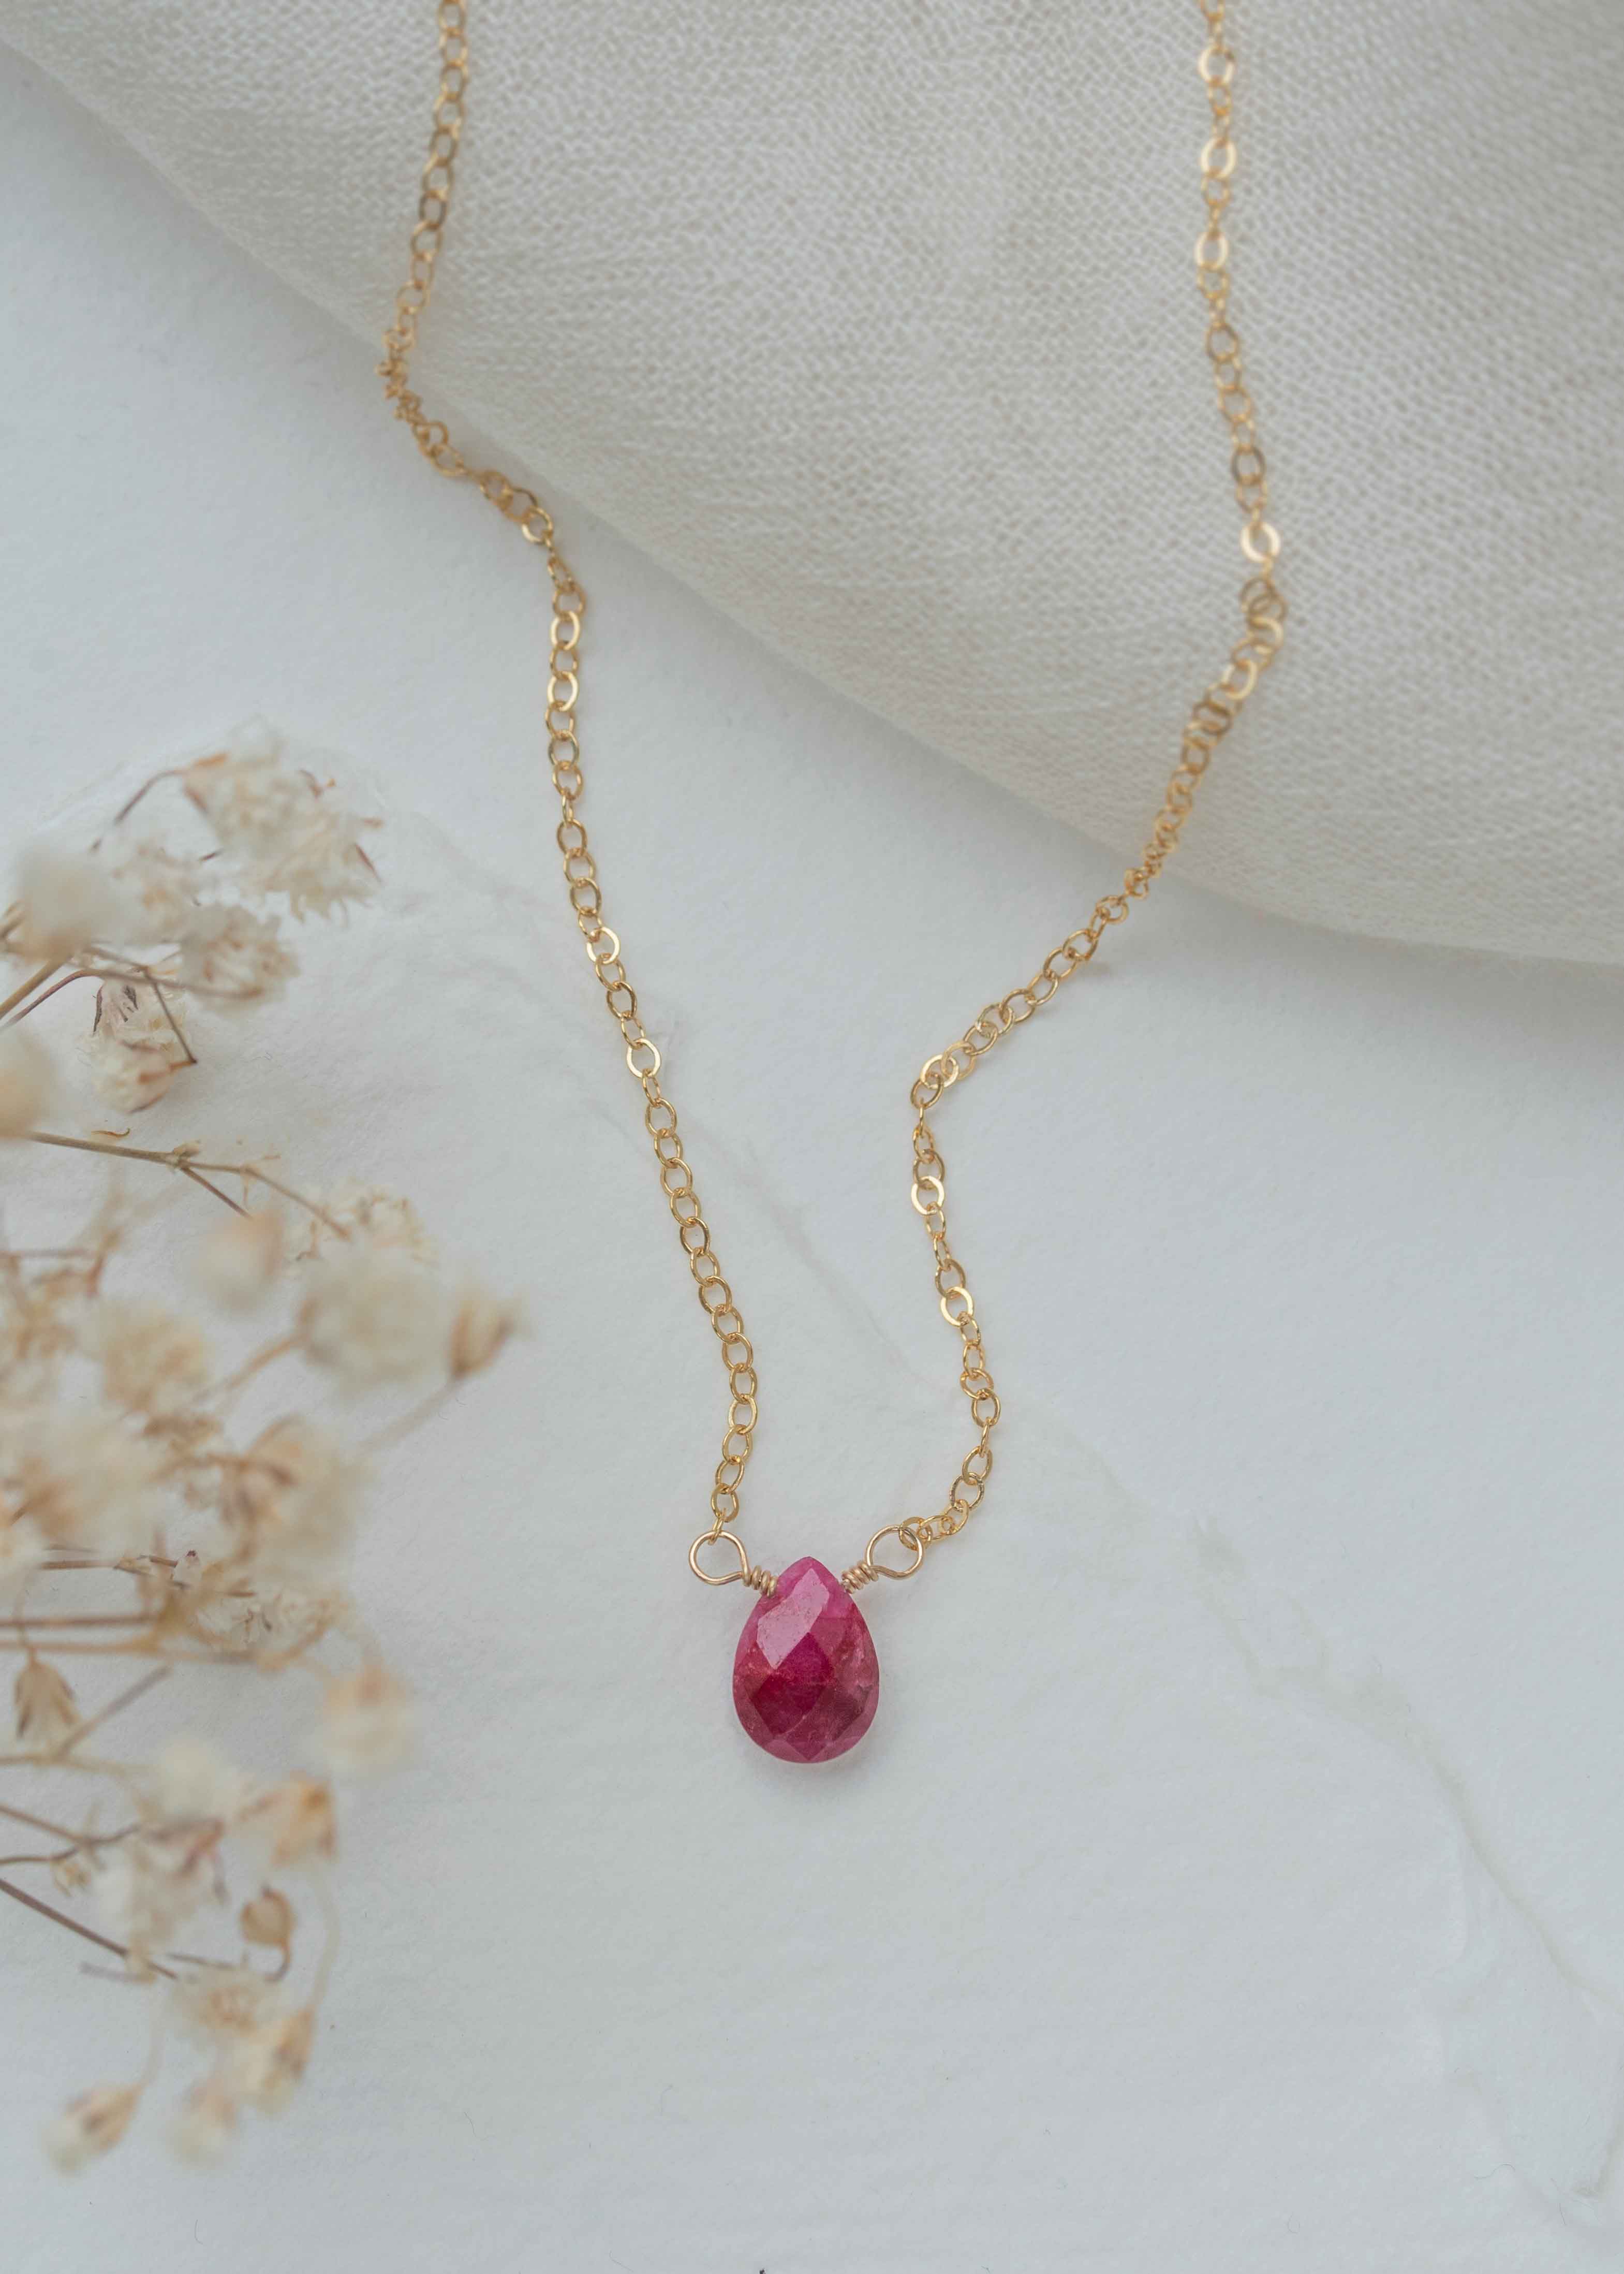 genuine ruby necklace custom made handmade gifts for july birthday girls